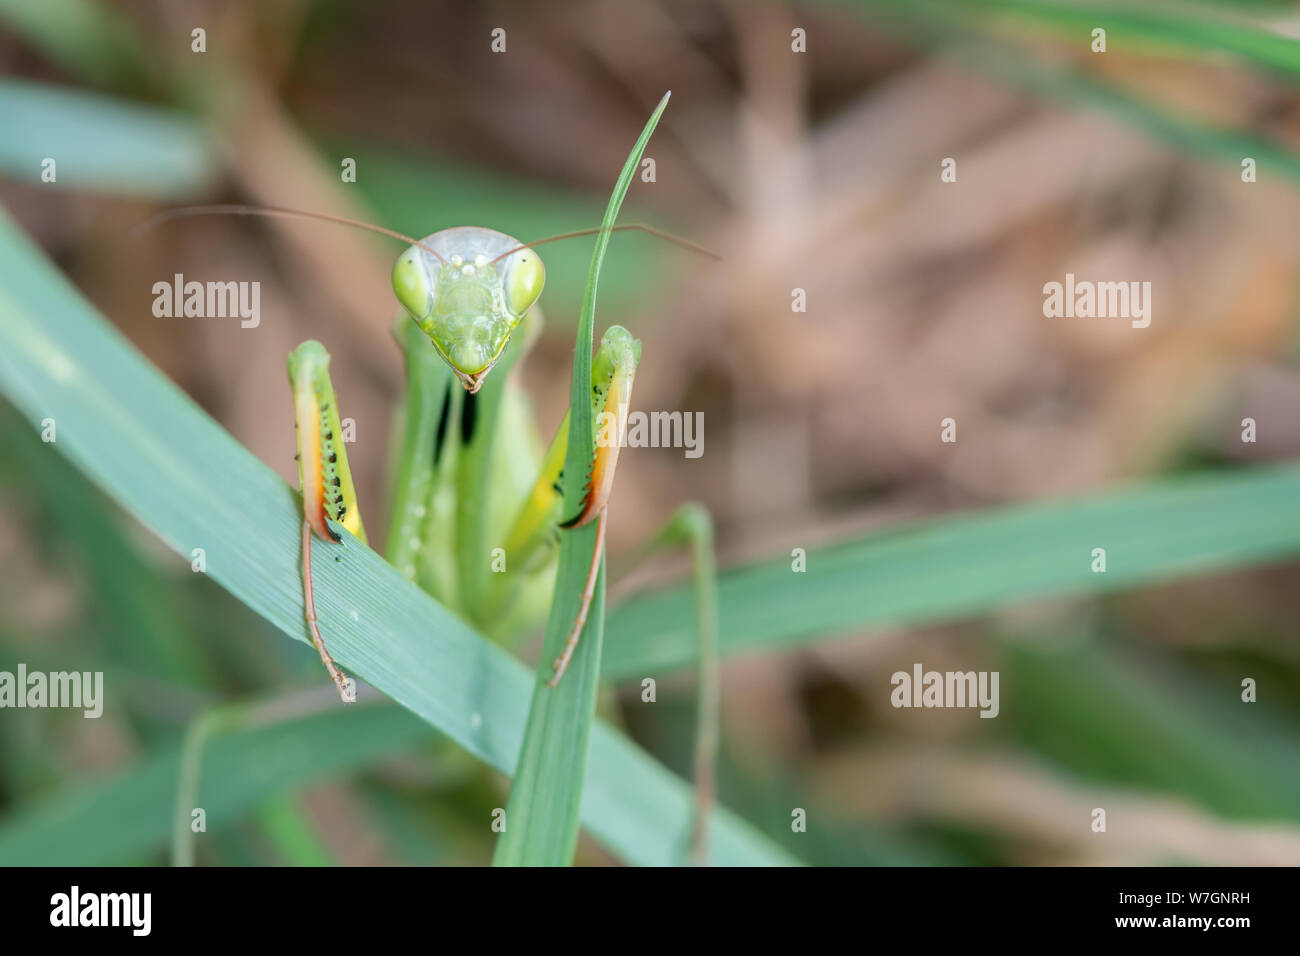 Fermer la vue de vert femme Mantis religiosa mante religieuse looking at camera, greeen fond d'herbe. Banque D'Images